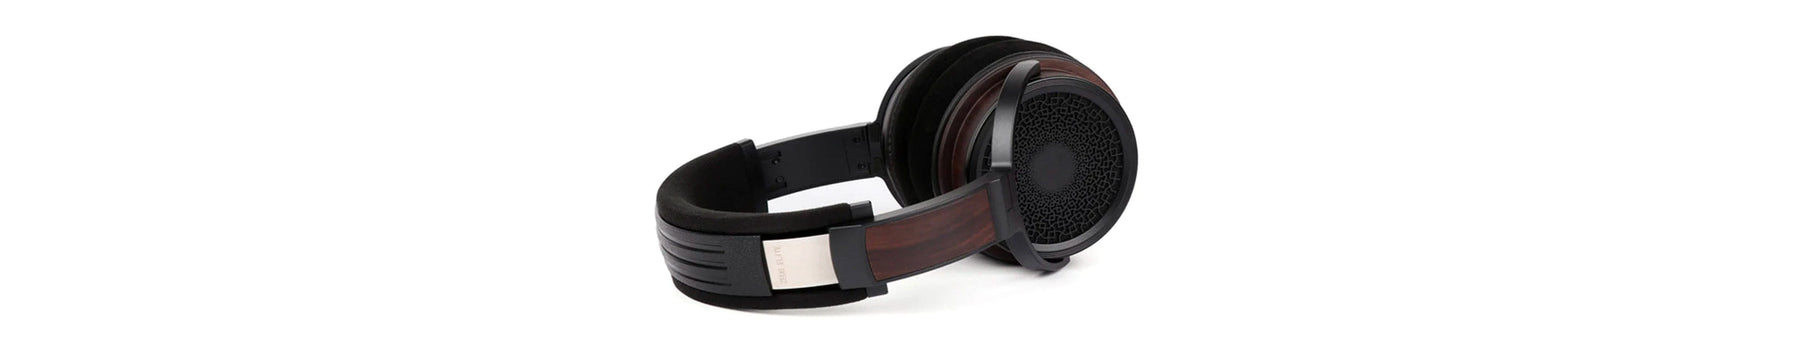 HarmonicDyne Zeus Elite Premium Over-Ear Headphones with Wooden Earcups & 50mm Large Dynamic Drivers